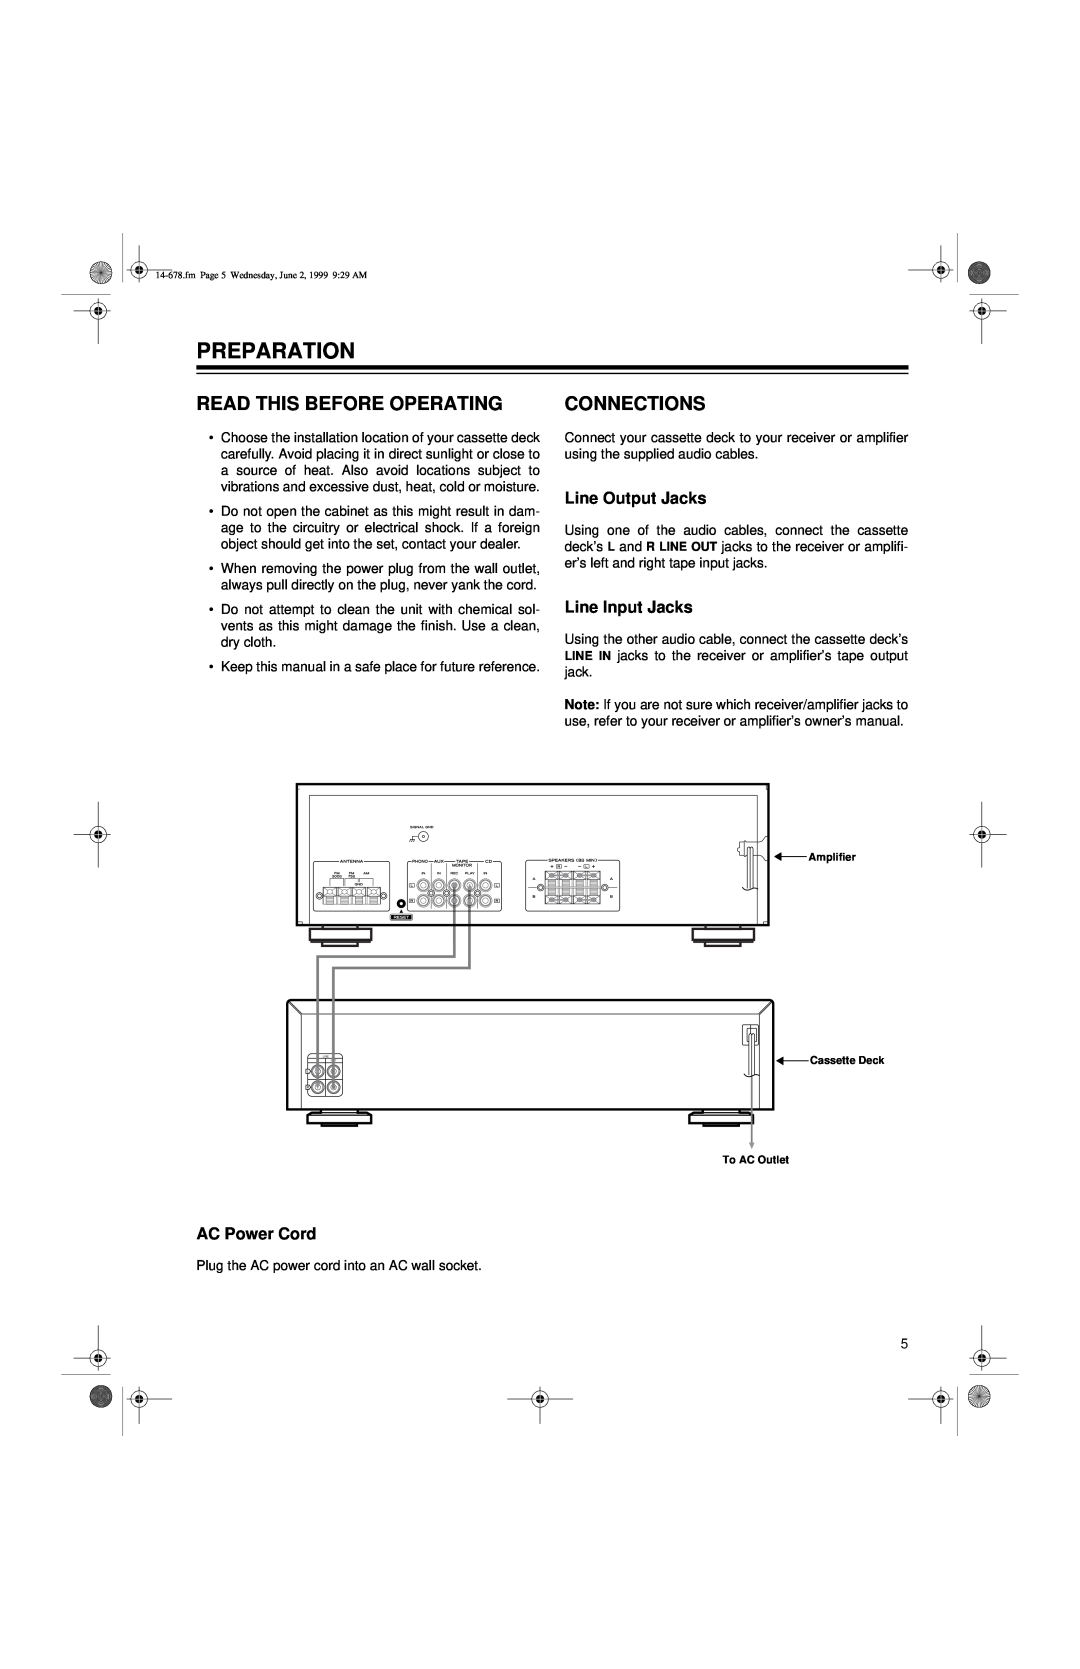 Optimus - Katadyn Products Inc SCT-540 Preparation, Read This Before Operating, Line Output Jacks, Line Input Jacks 